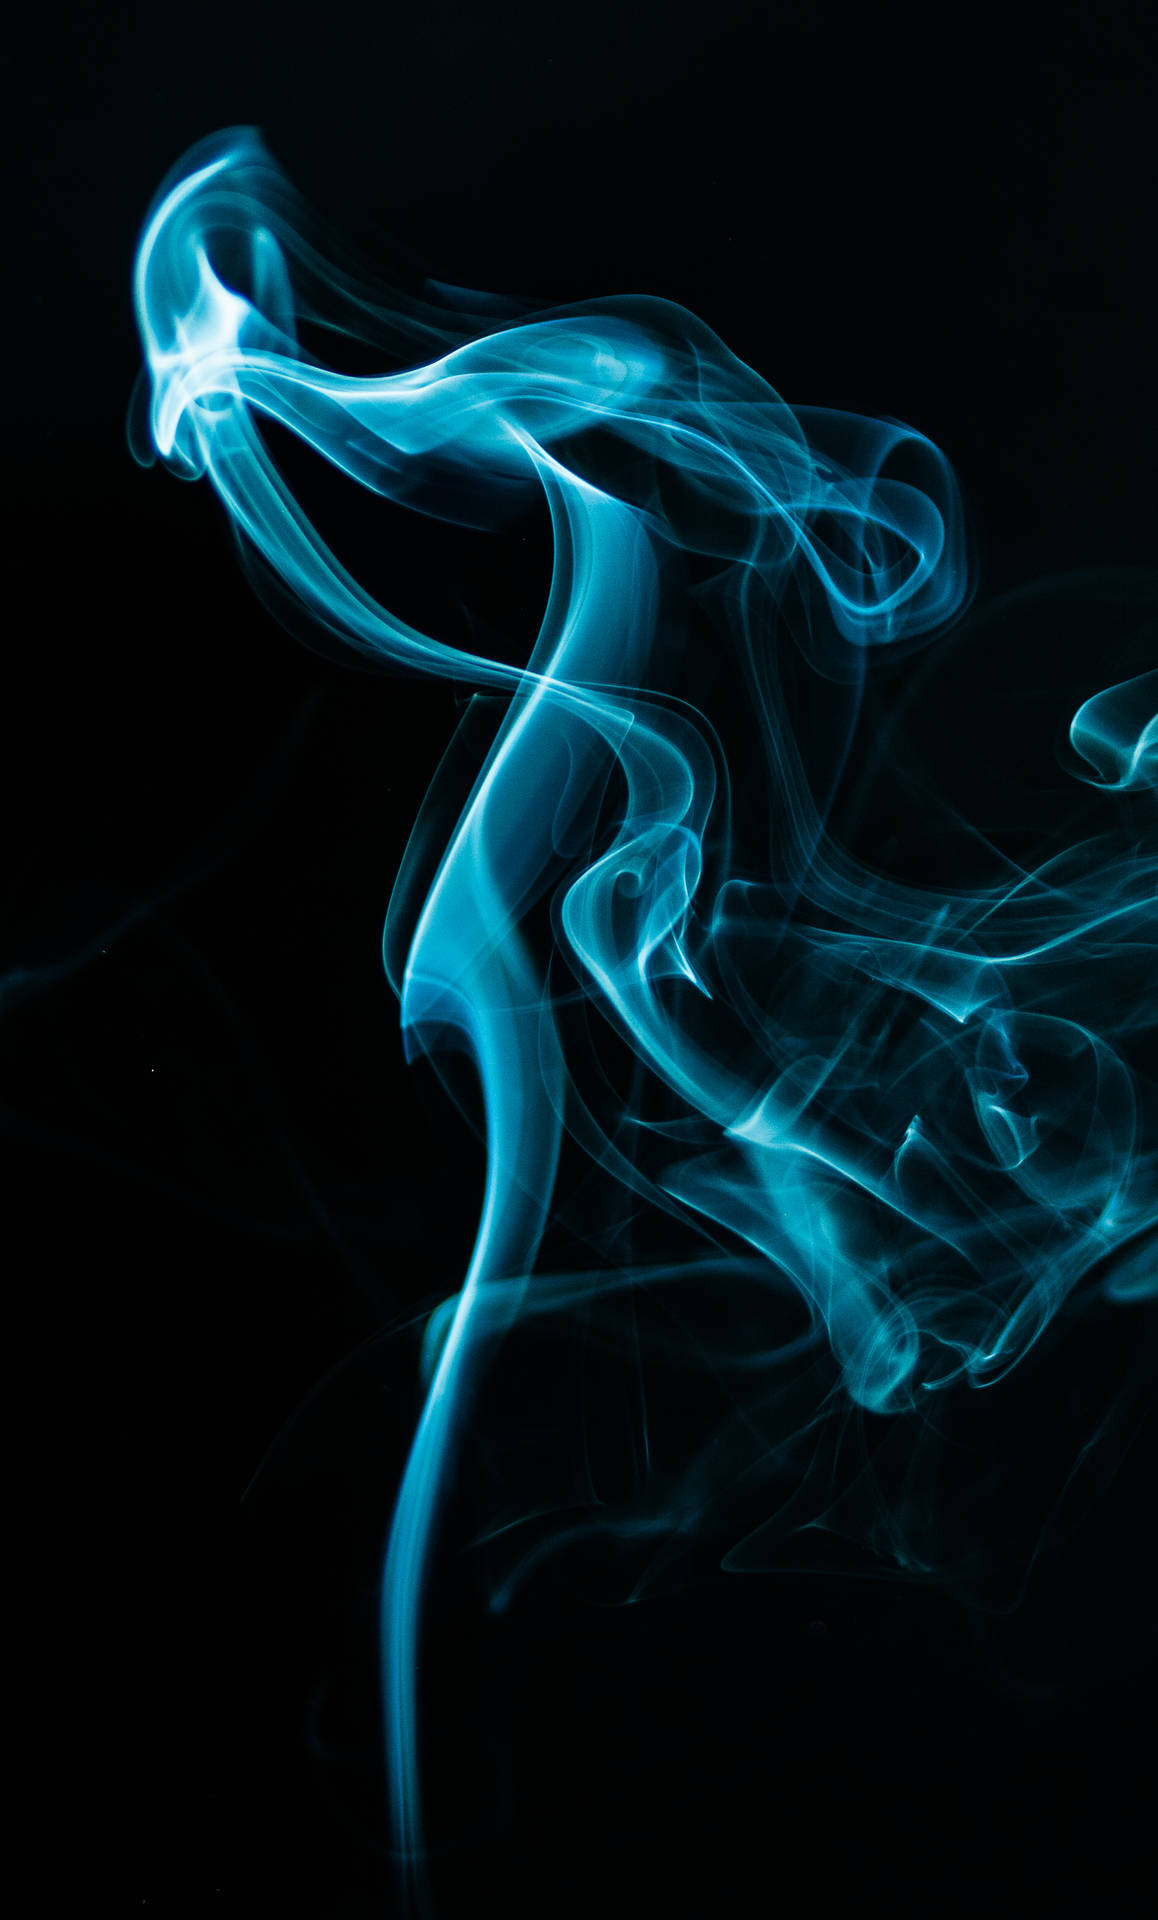 Flowing Blue Smoke Patterns Background